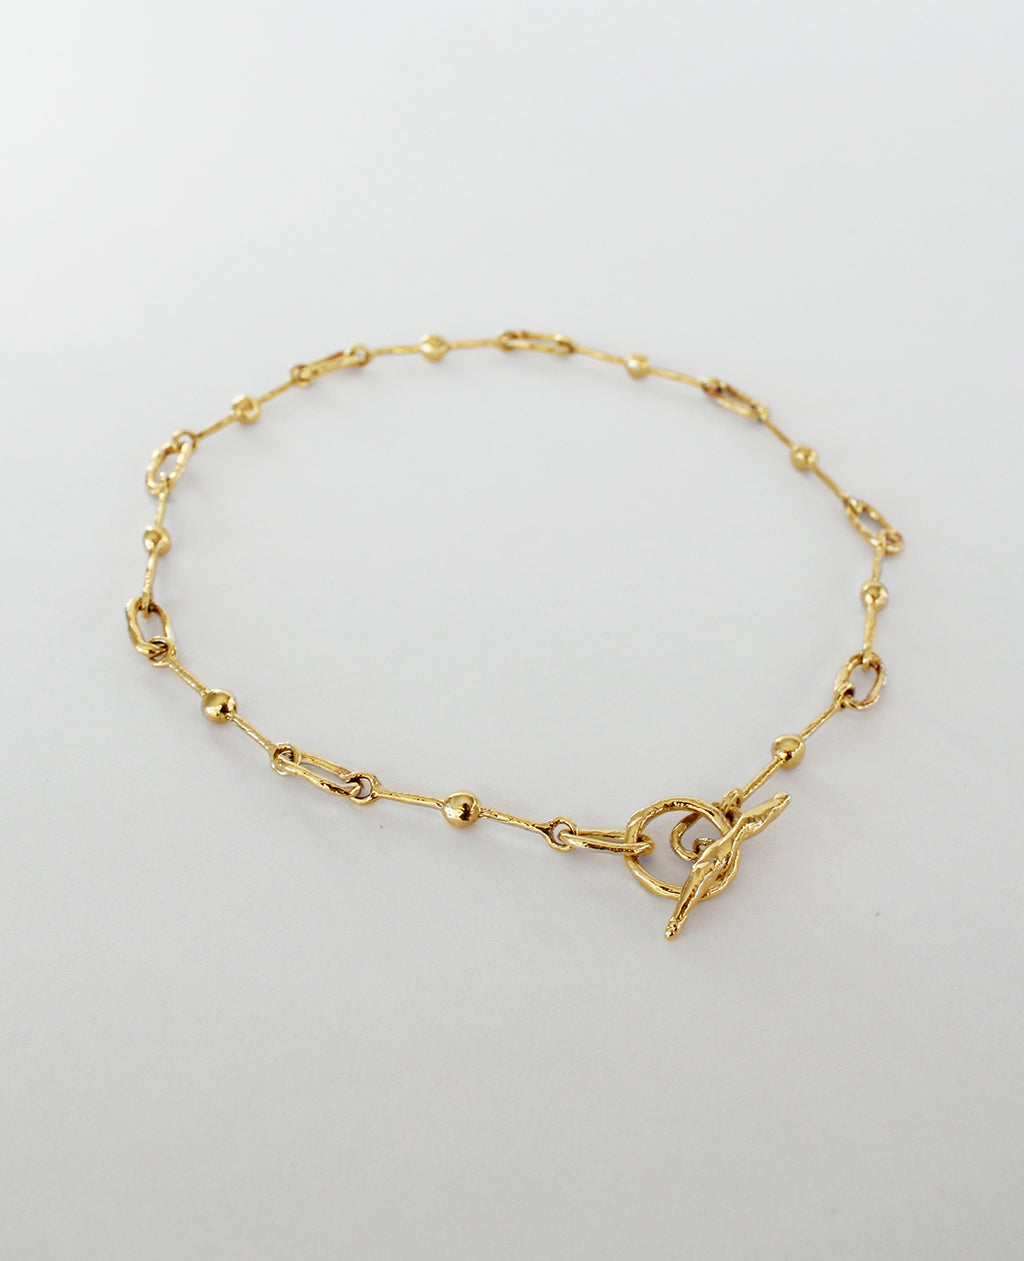 NODES // golden choker - ORA-C jewelry - handmade jewelry by Montreal based independent designer Caroline Pham